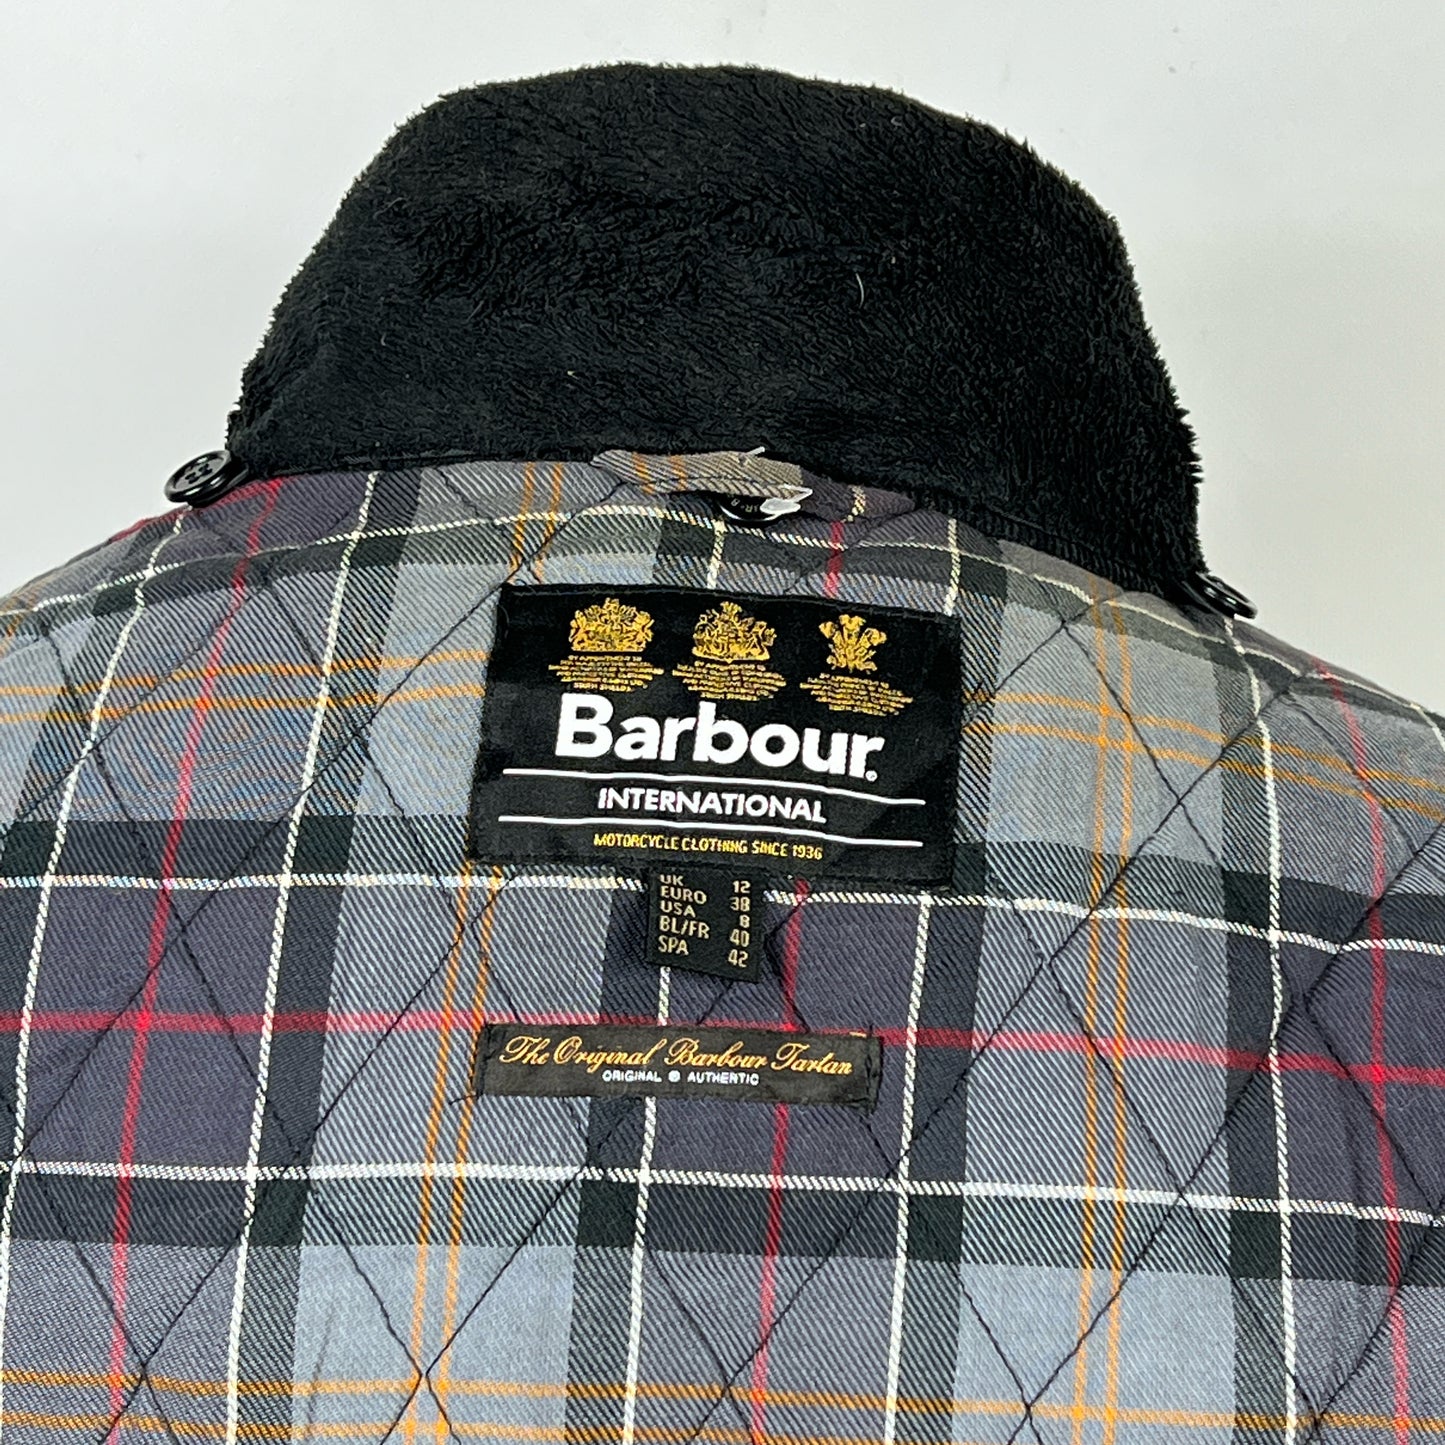 Giacca Barbour International Medium nero tg.42  -Lady Rectifier Wax Jacket UK12